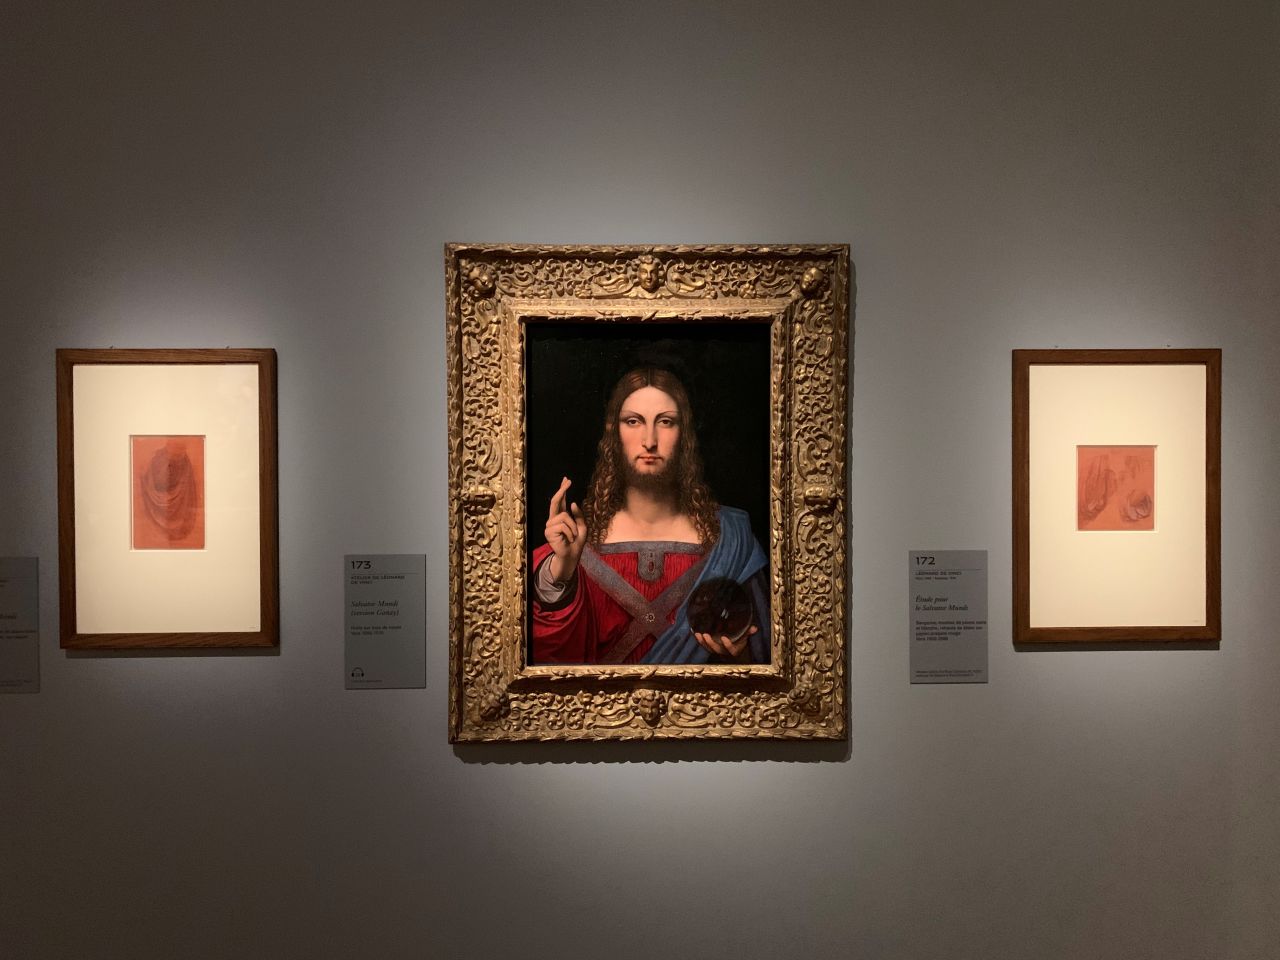 The "De Ganay" Salvator Mundi on display at the Louvre.